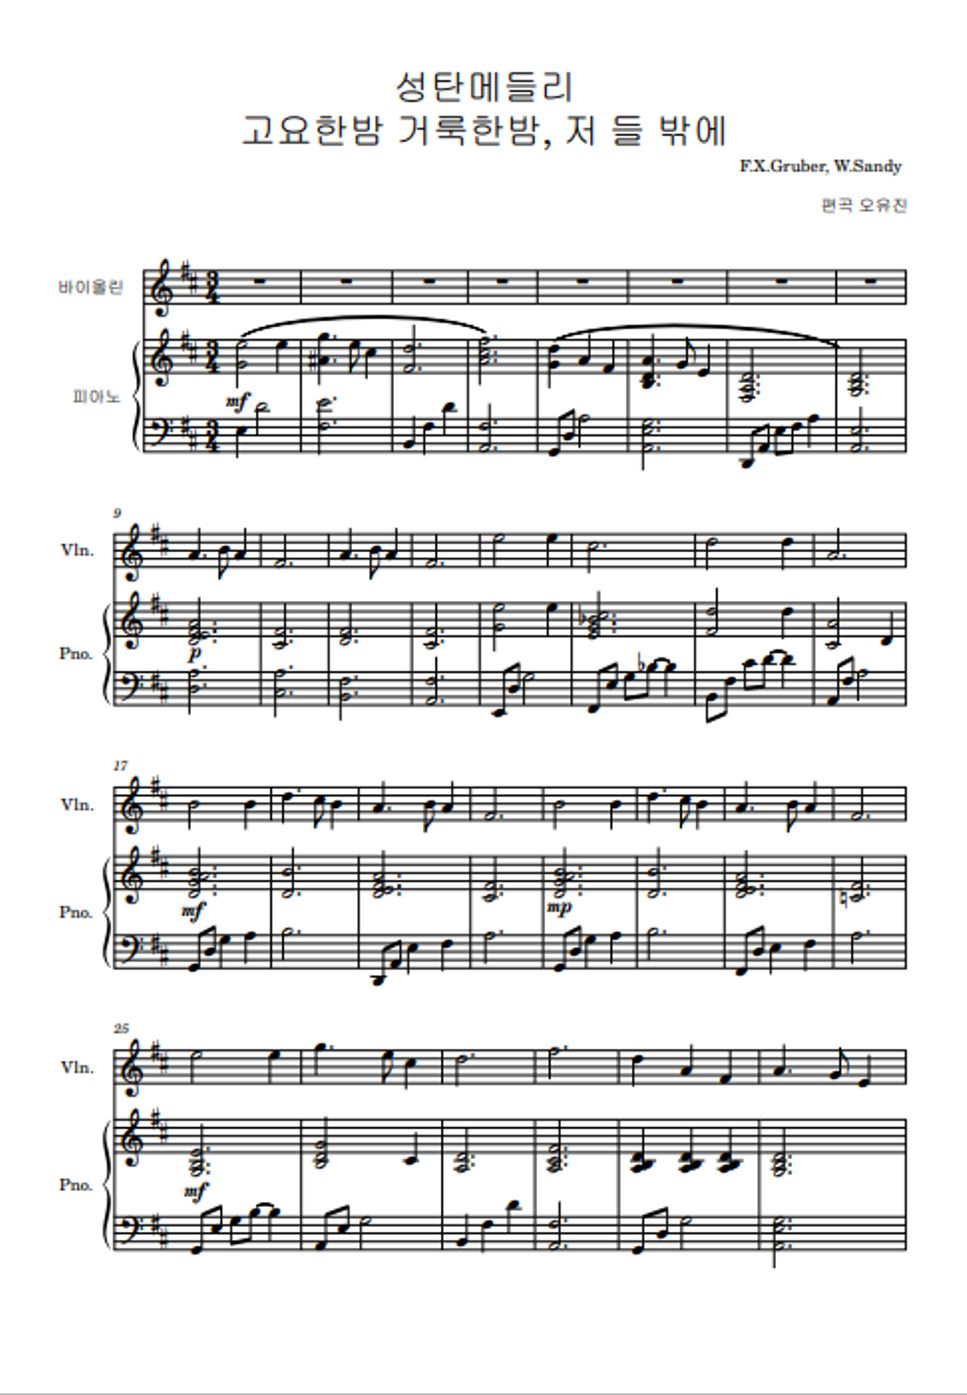 F.X.Gruber, W.Sandy - [바이올린+피아노]성탄메들리(고요한 밤 거룩한 밤+노엘) (메들리로 편곡한 버전) by 오유진